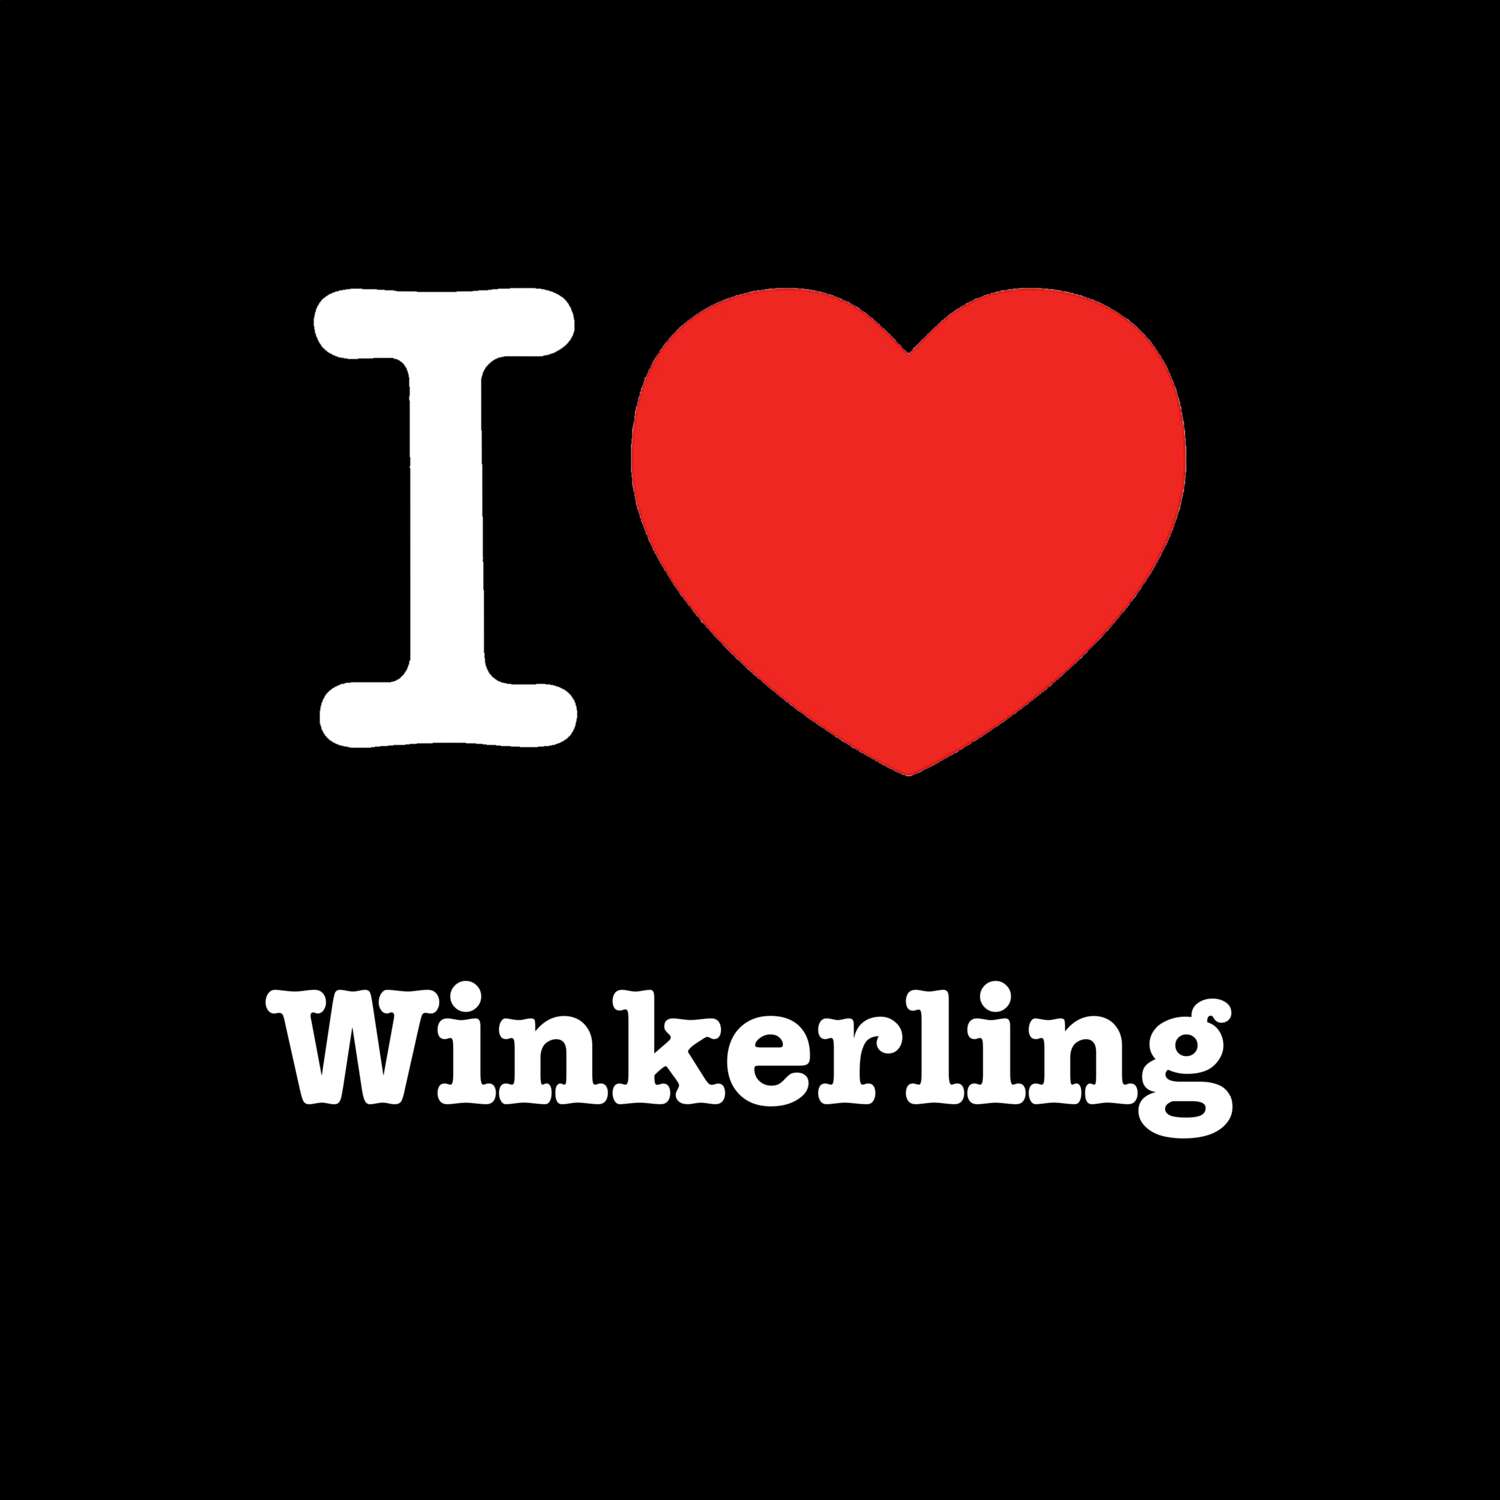 Winkerling T-Shirt »I love«